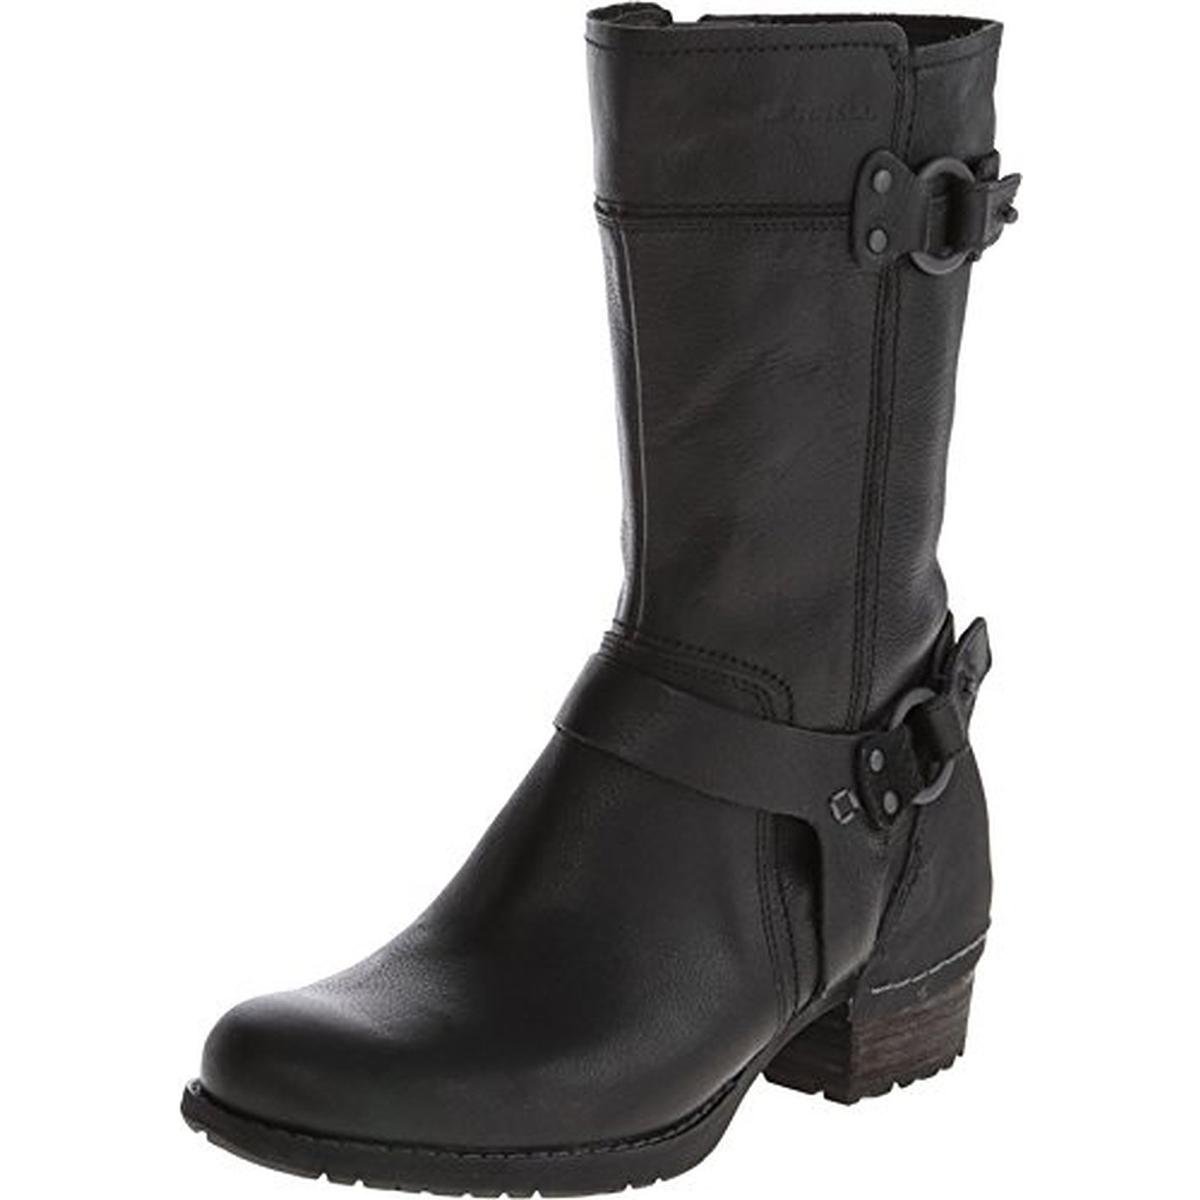 Merrell 7924 Womens Shiloh Peak Black Leather Mid-Calf Boots Shoes 8 BHFO